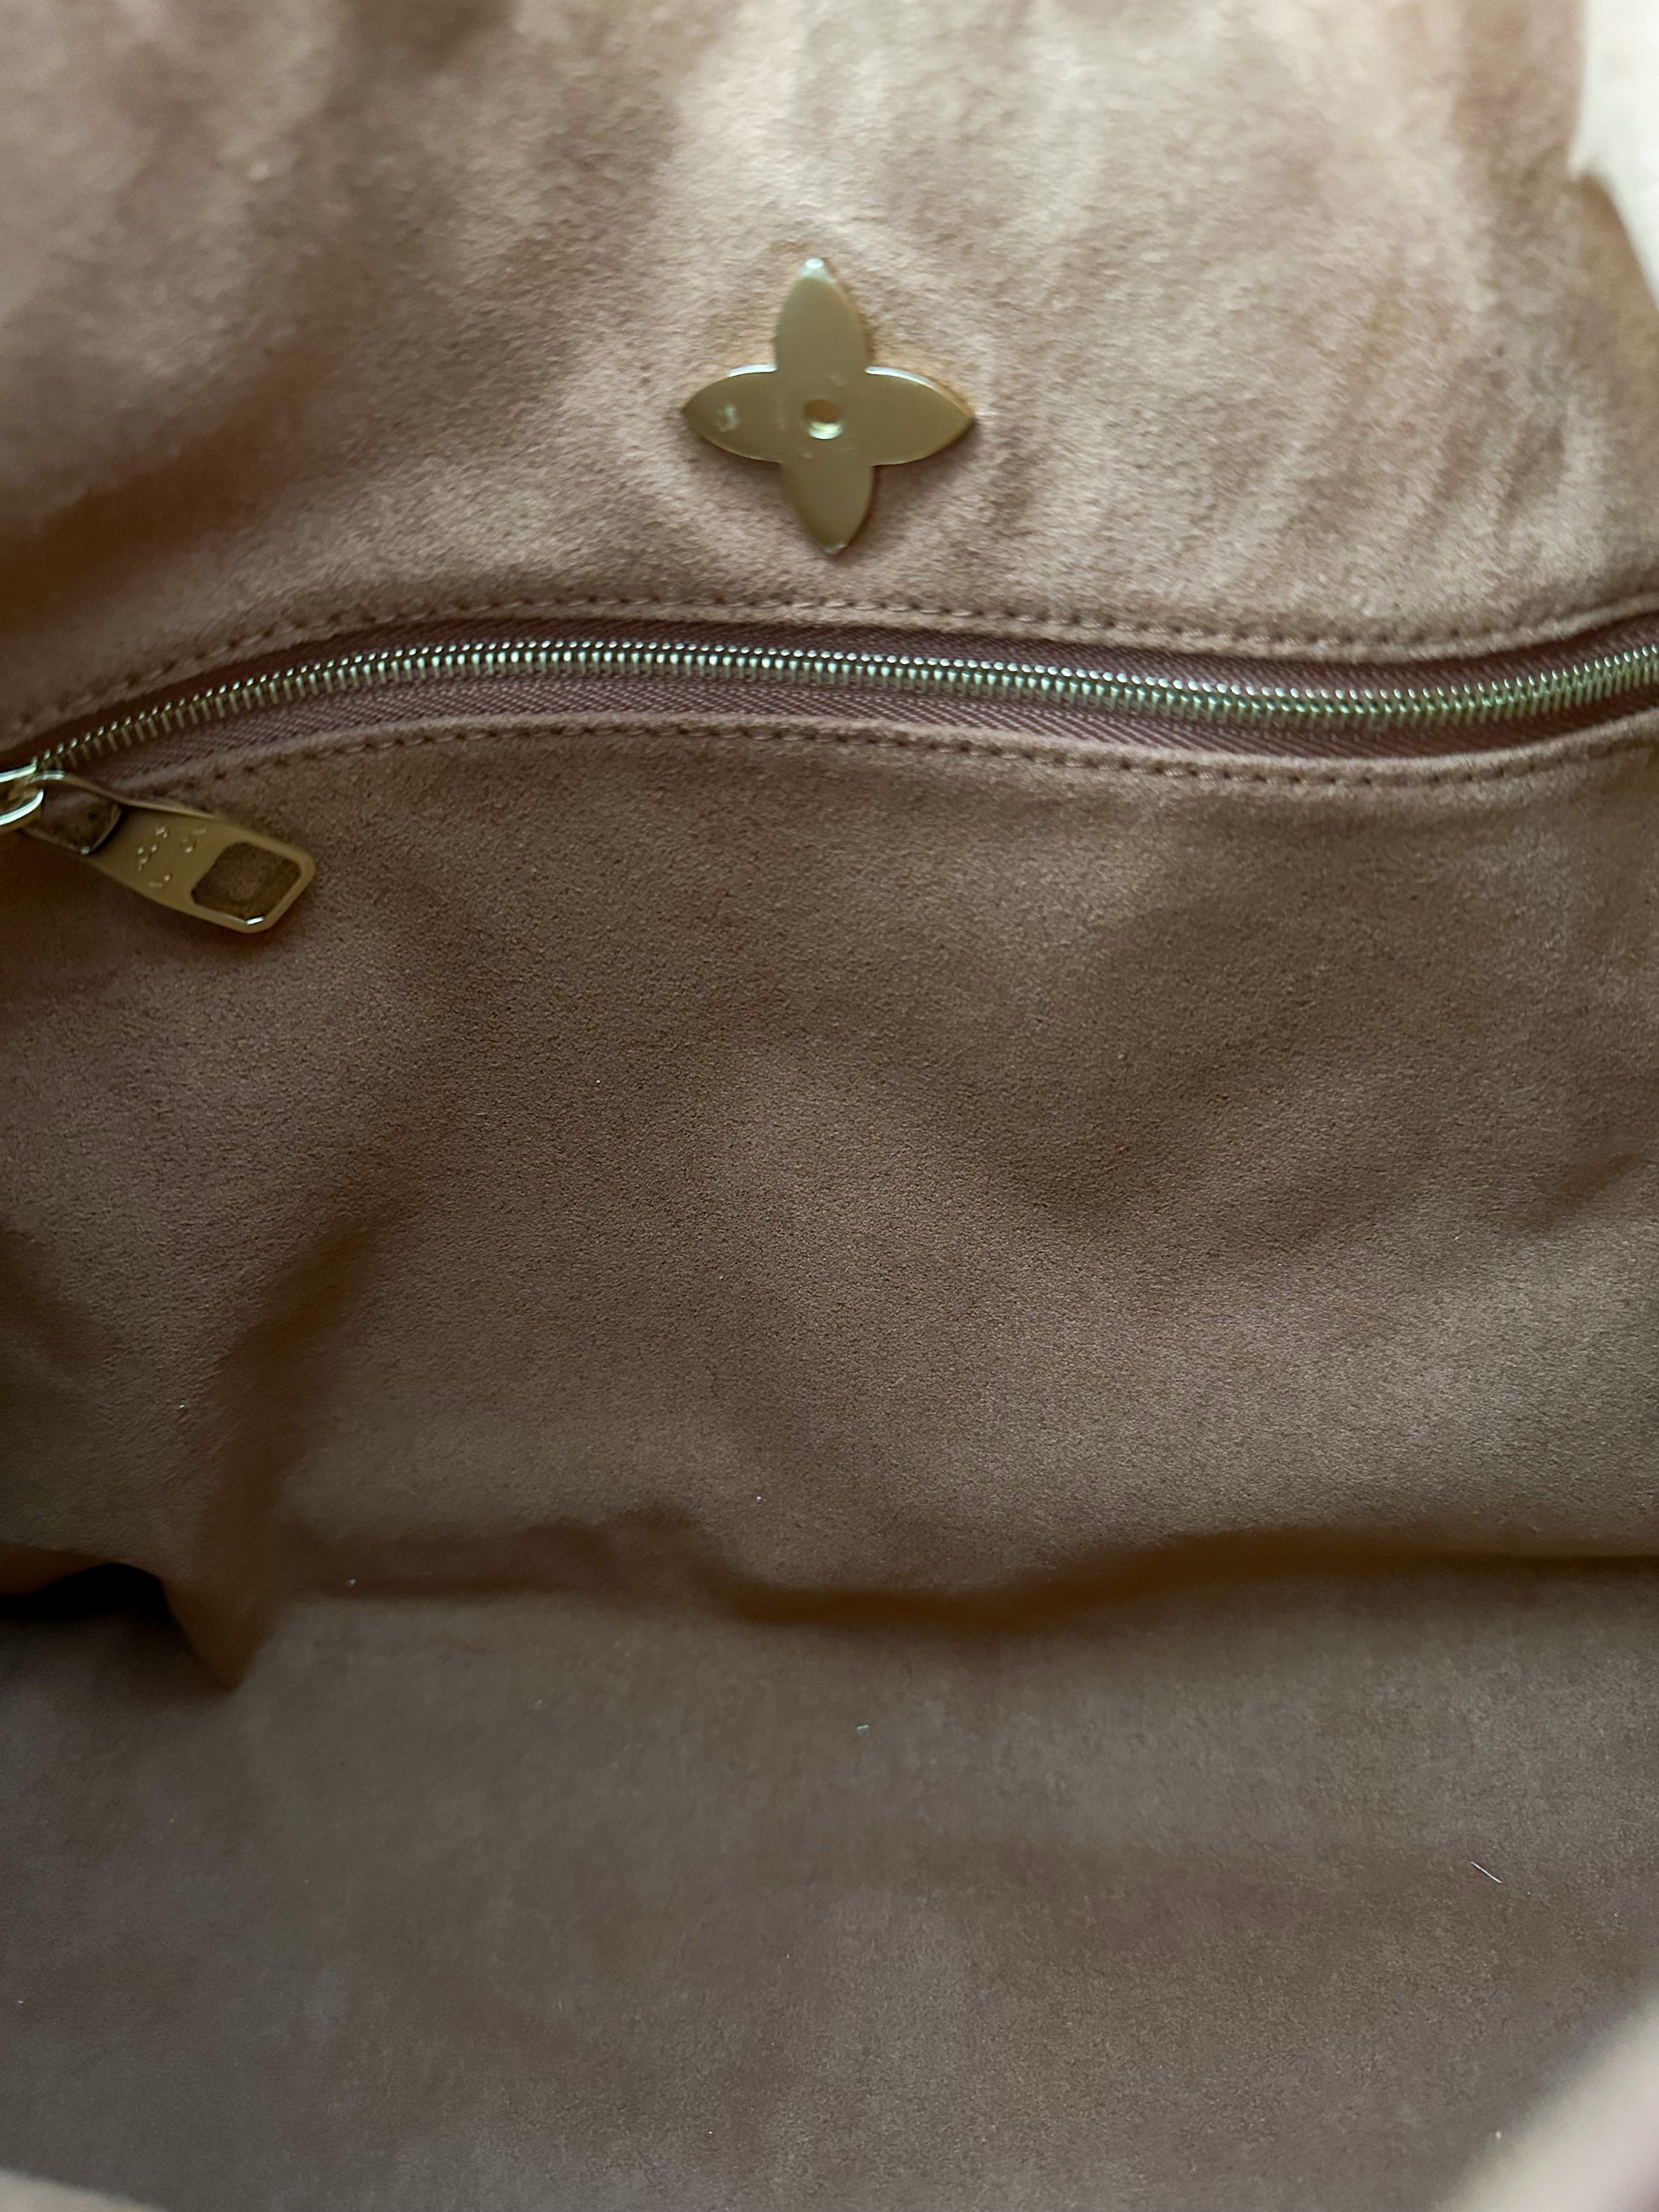 Louis Vuitton Monogram Flower Bag